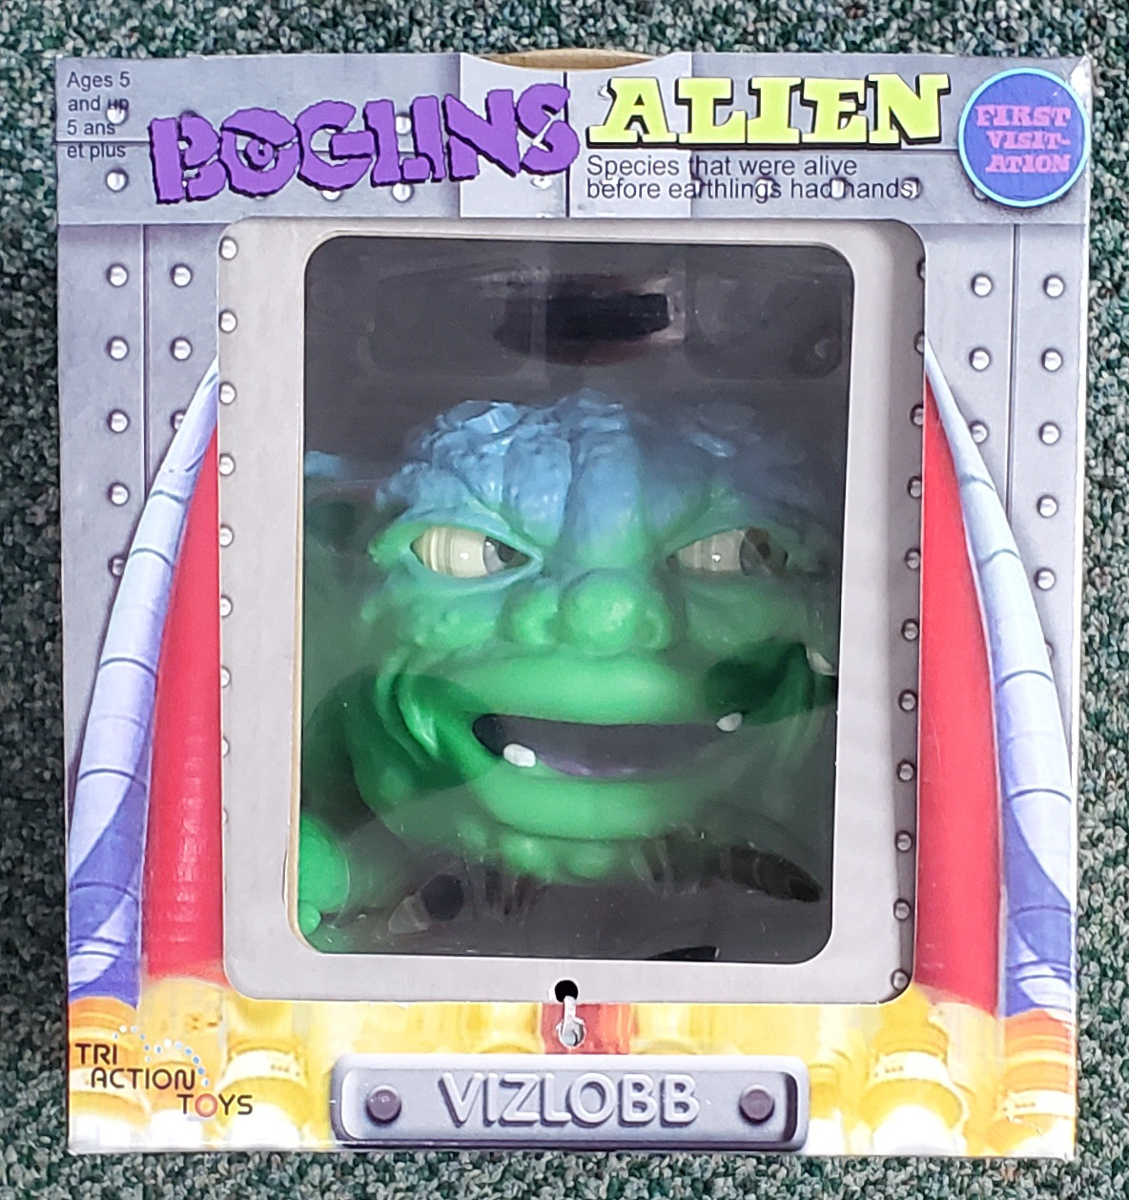 MIB Tri Action Toys First Edition Boglins Alien Vizlobb Puppet: Mint in Box 1